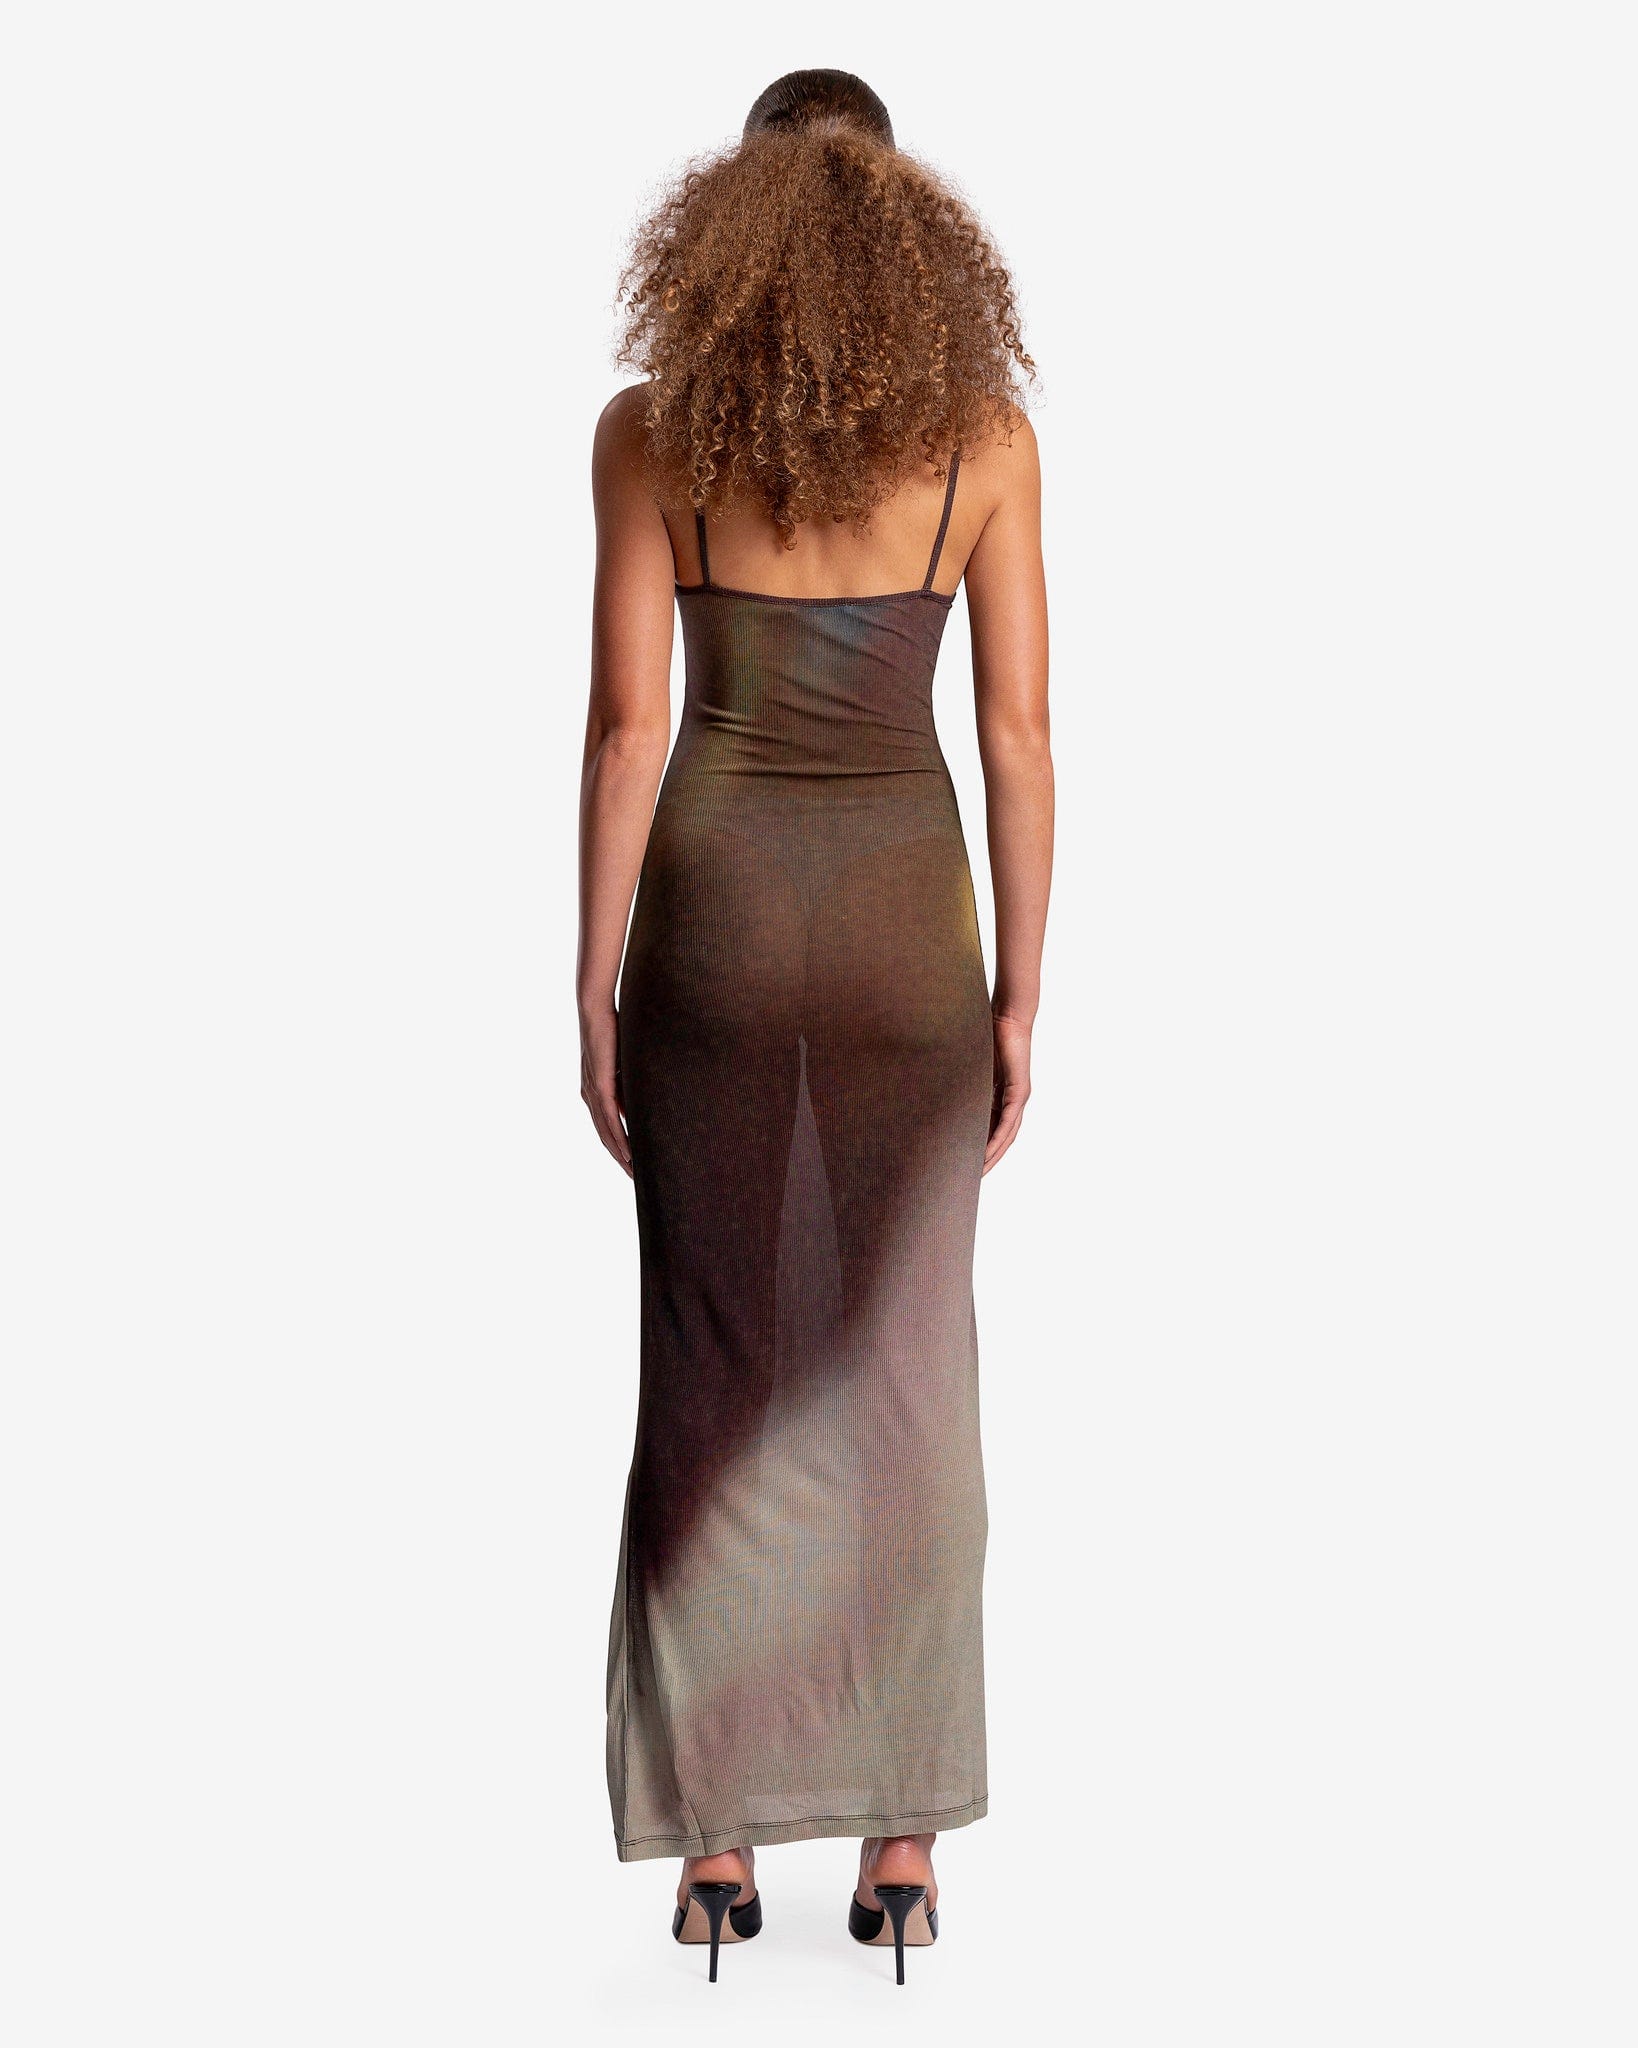 Savage x Fenty Glisenette Slip Dress With Split in Metallic